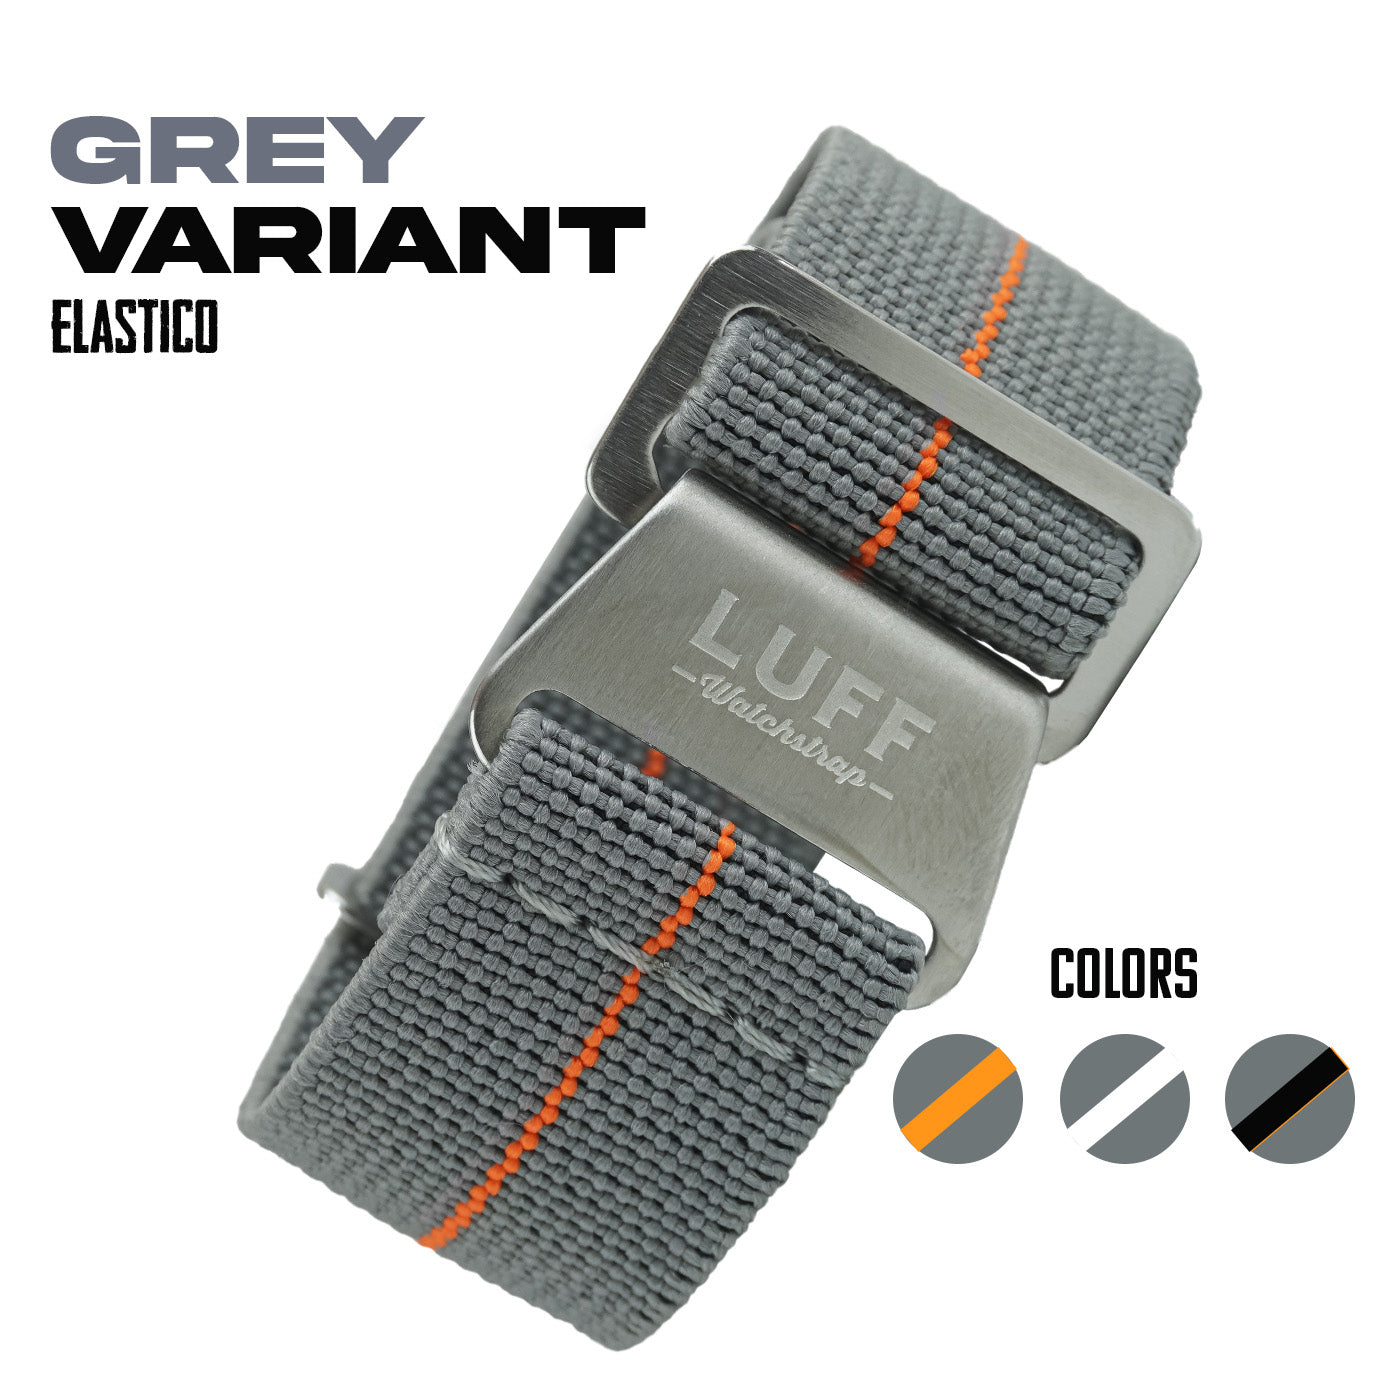 Grey Variant - Elastico (6903641505879)